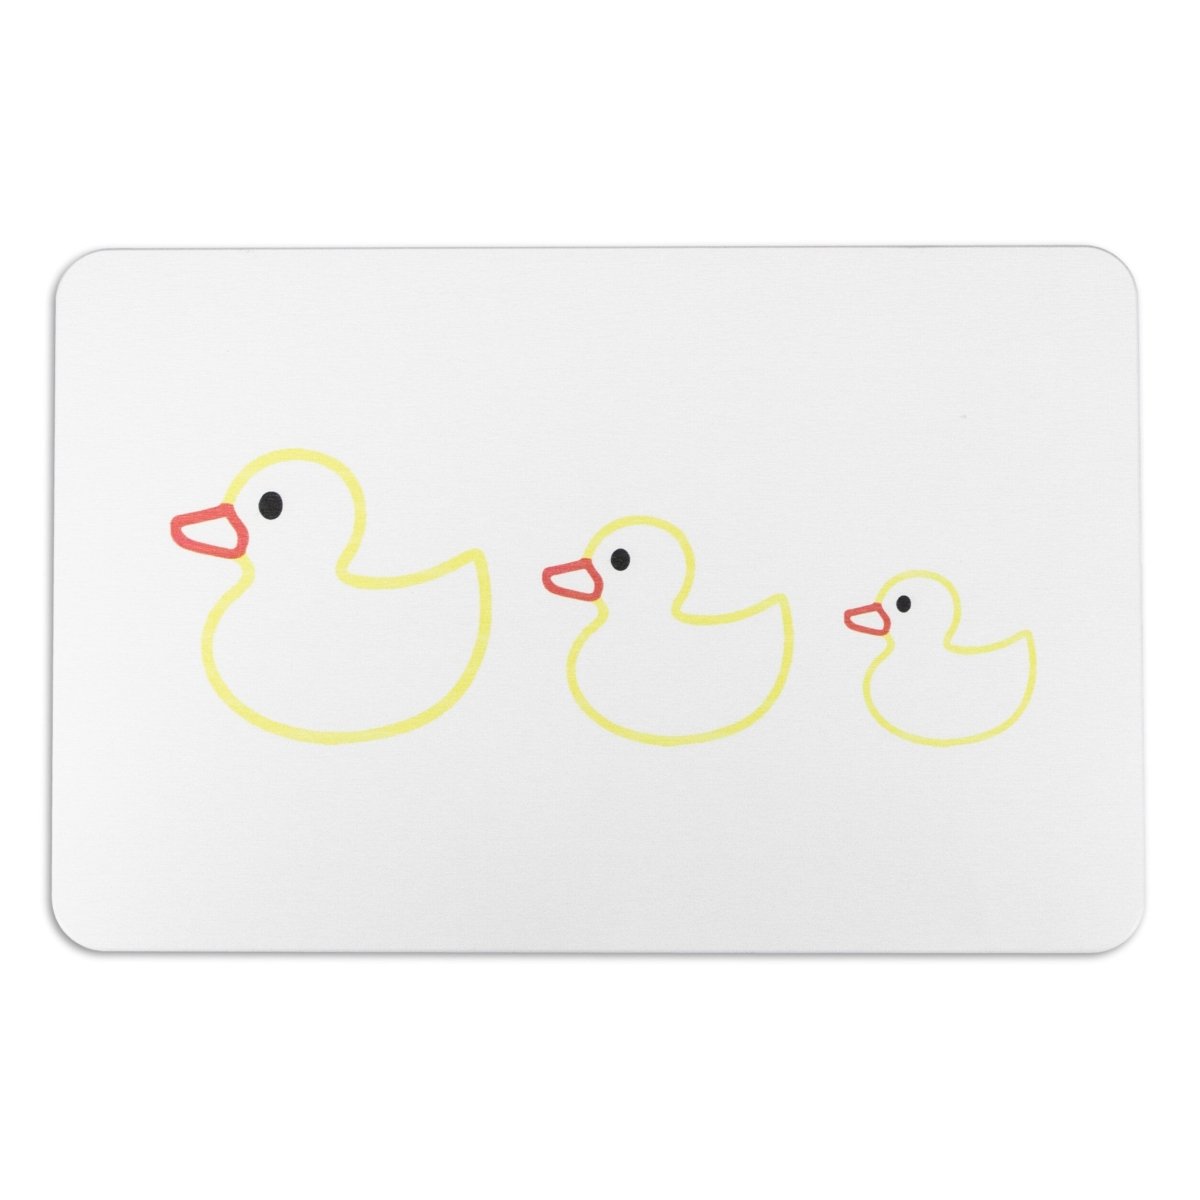 Rubber Duck Family Bathmat - White Stone Non Slip Bath Mat - Cute Bathmat - Bathroom Decor Mat - Kids Bathroom Mat - Antibacterial, 39X60Cm - Slips Away - Bath mat - 1344565281 -